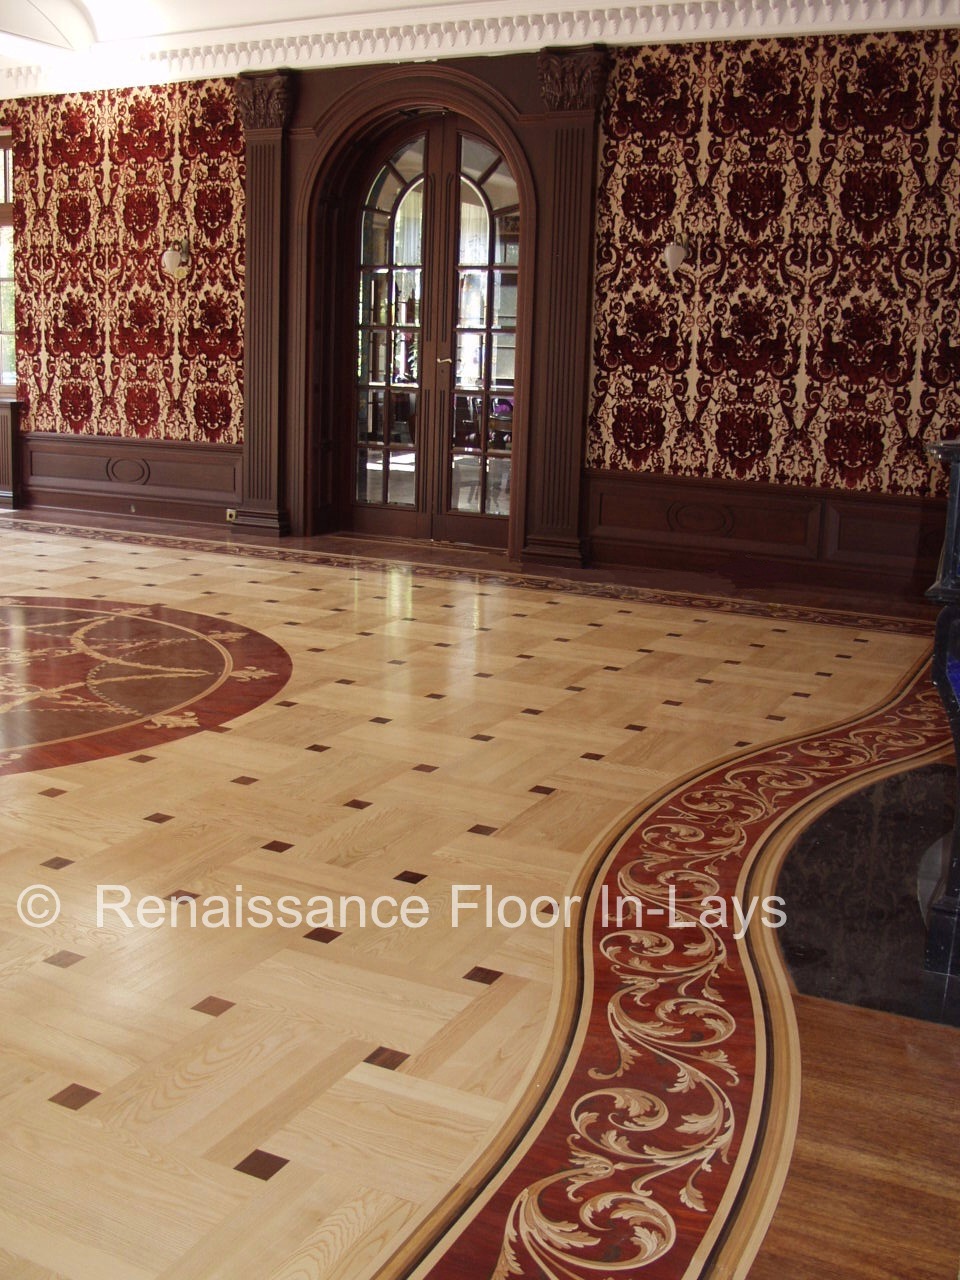 Hardwood Flooring Inlays Renaissance, Renaissance Hardwood Floors